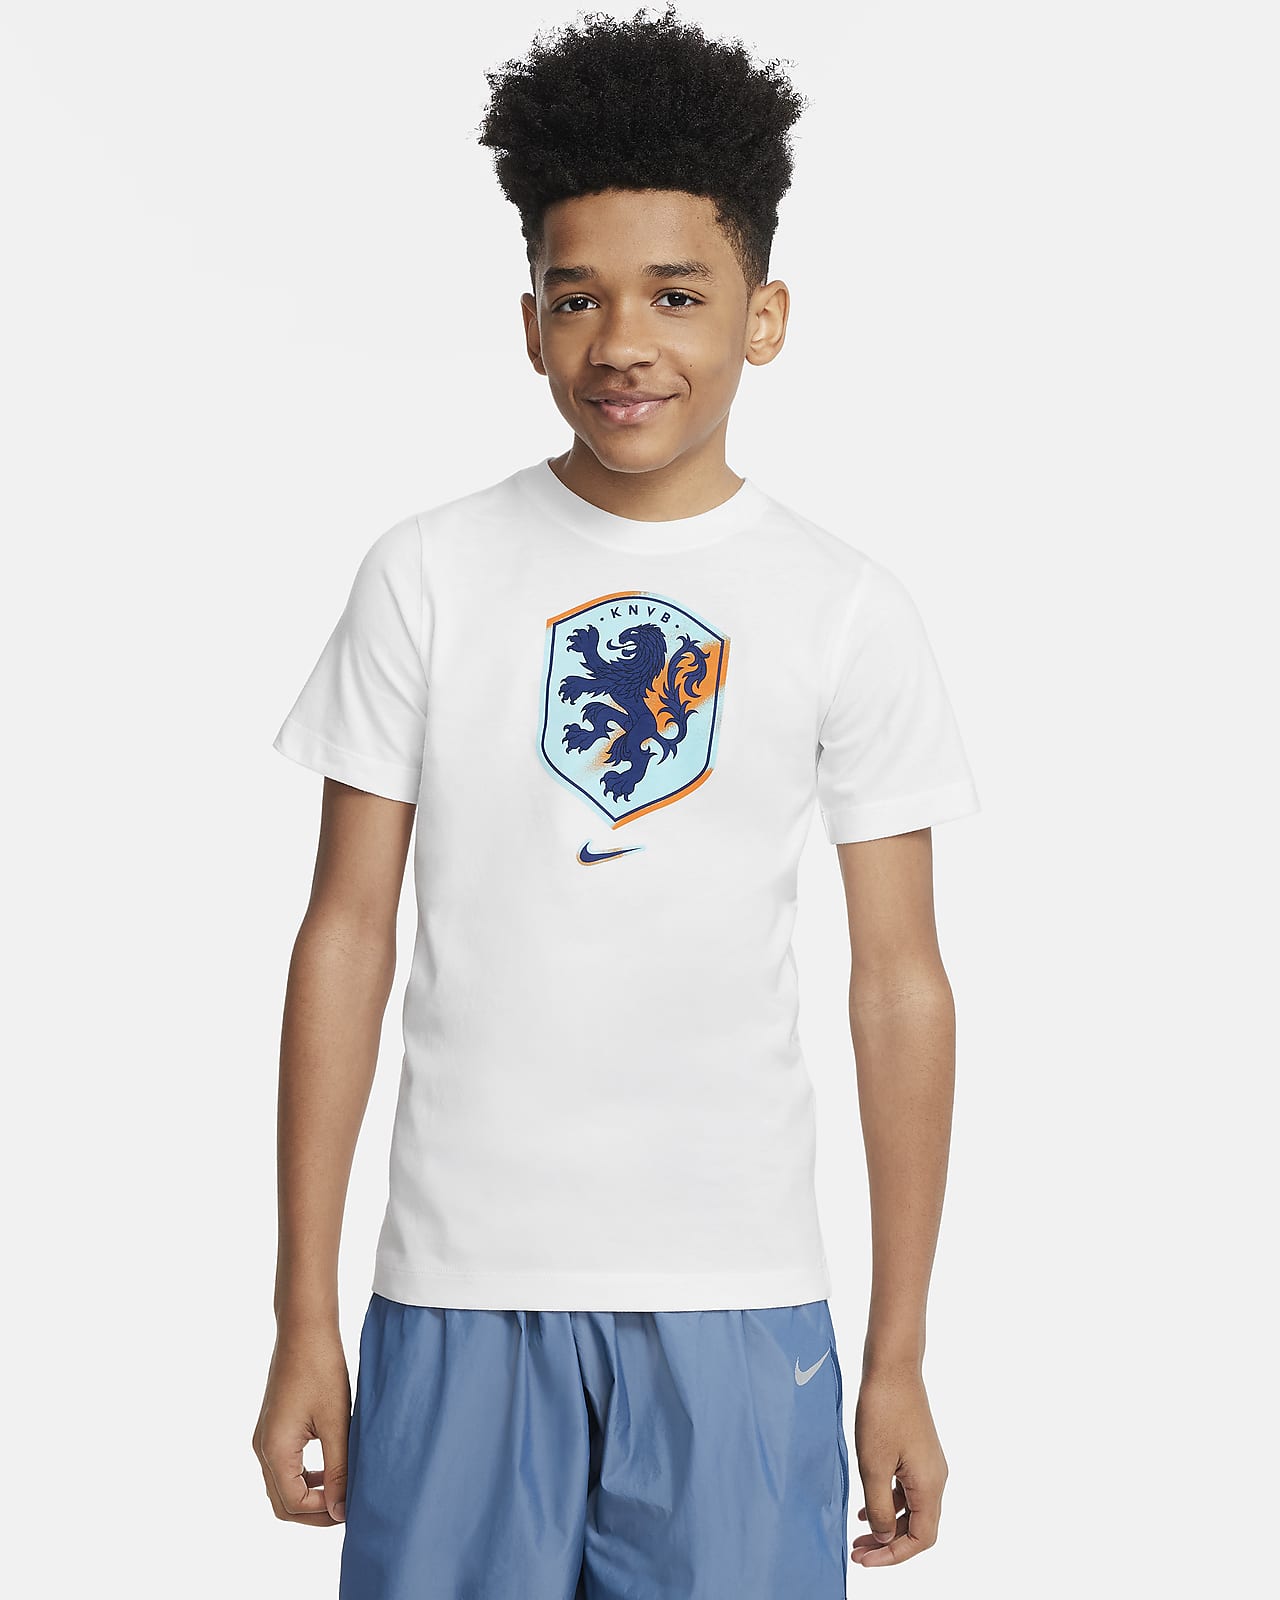 T-shirt Nike Football Pays-Bas pour ado